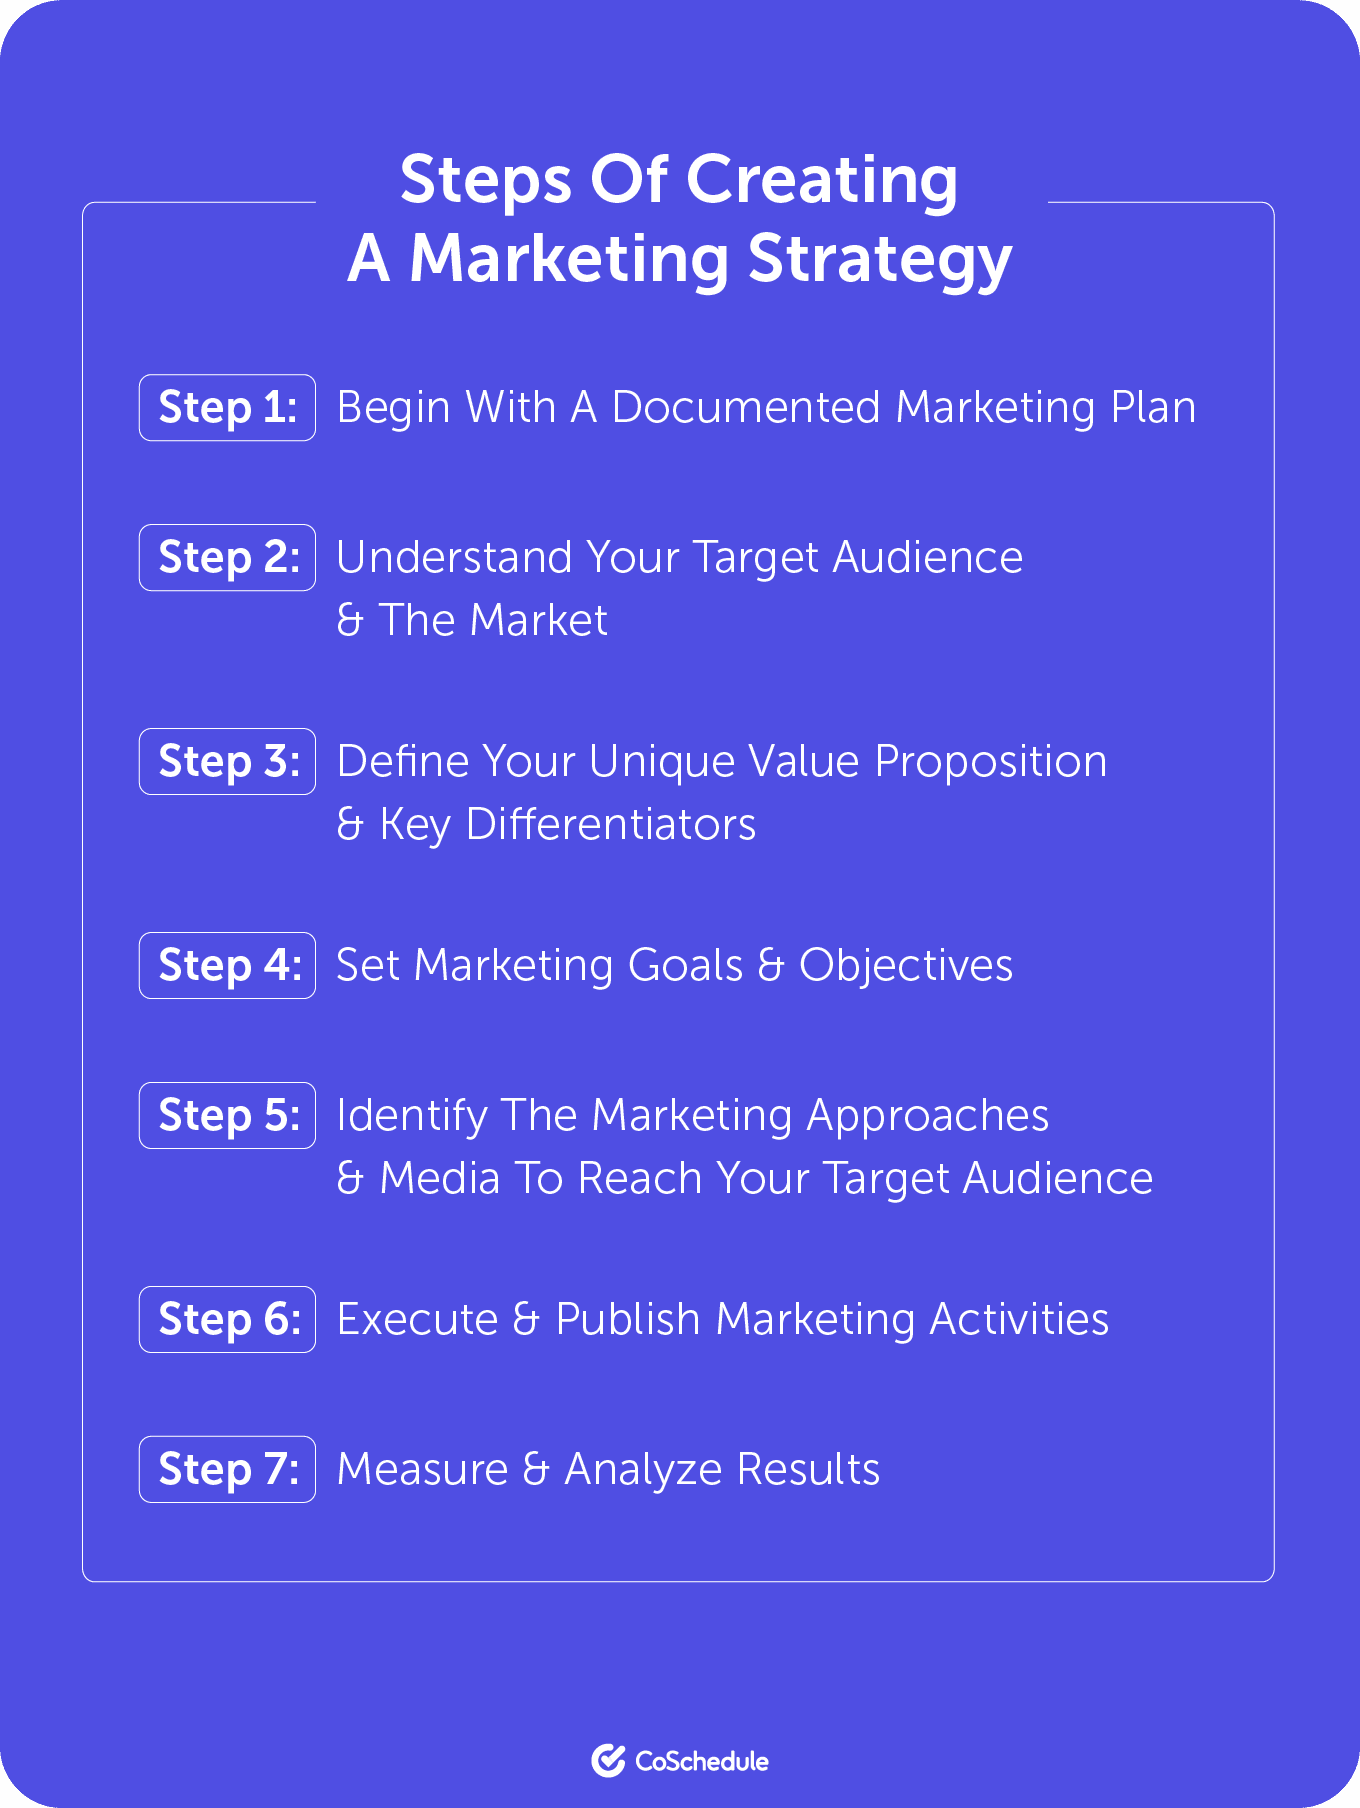 Steps to create a marketing strategy